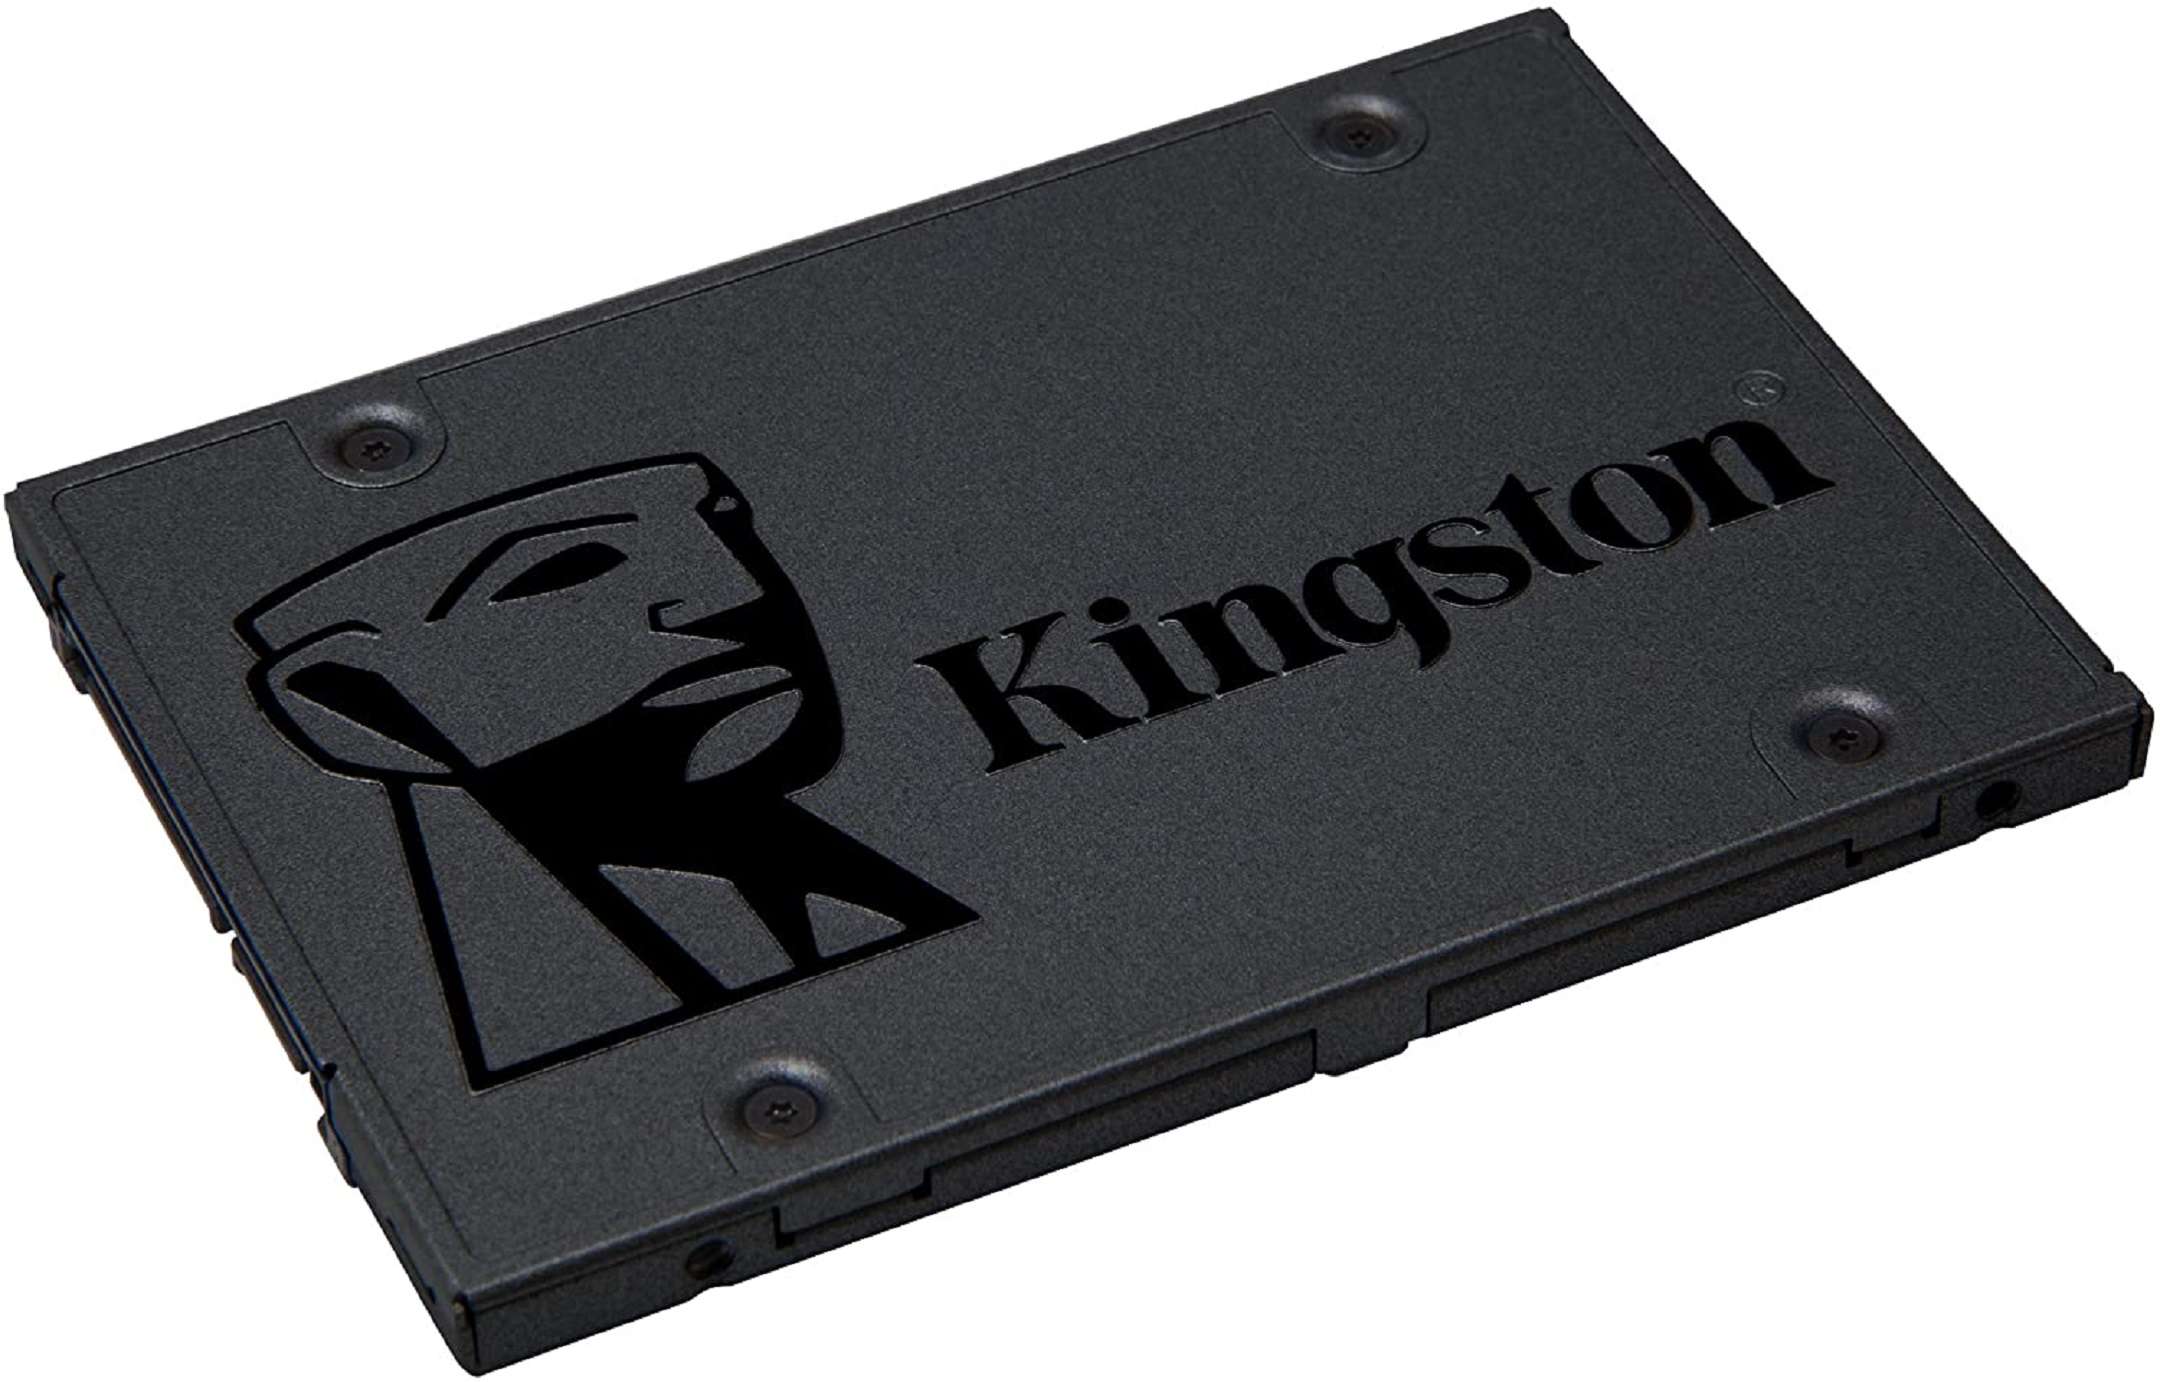 SSD Kingston